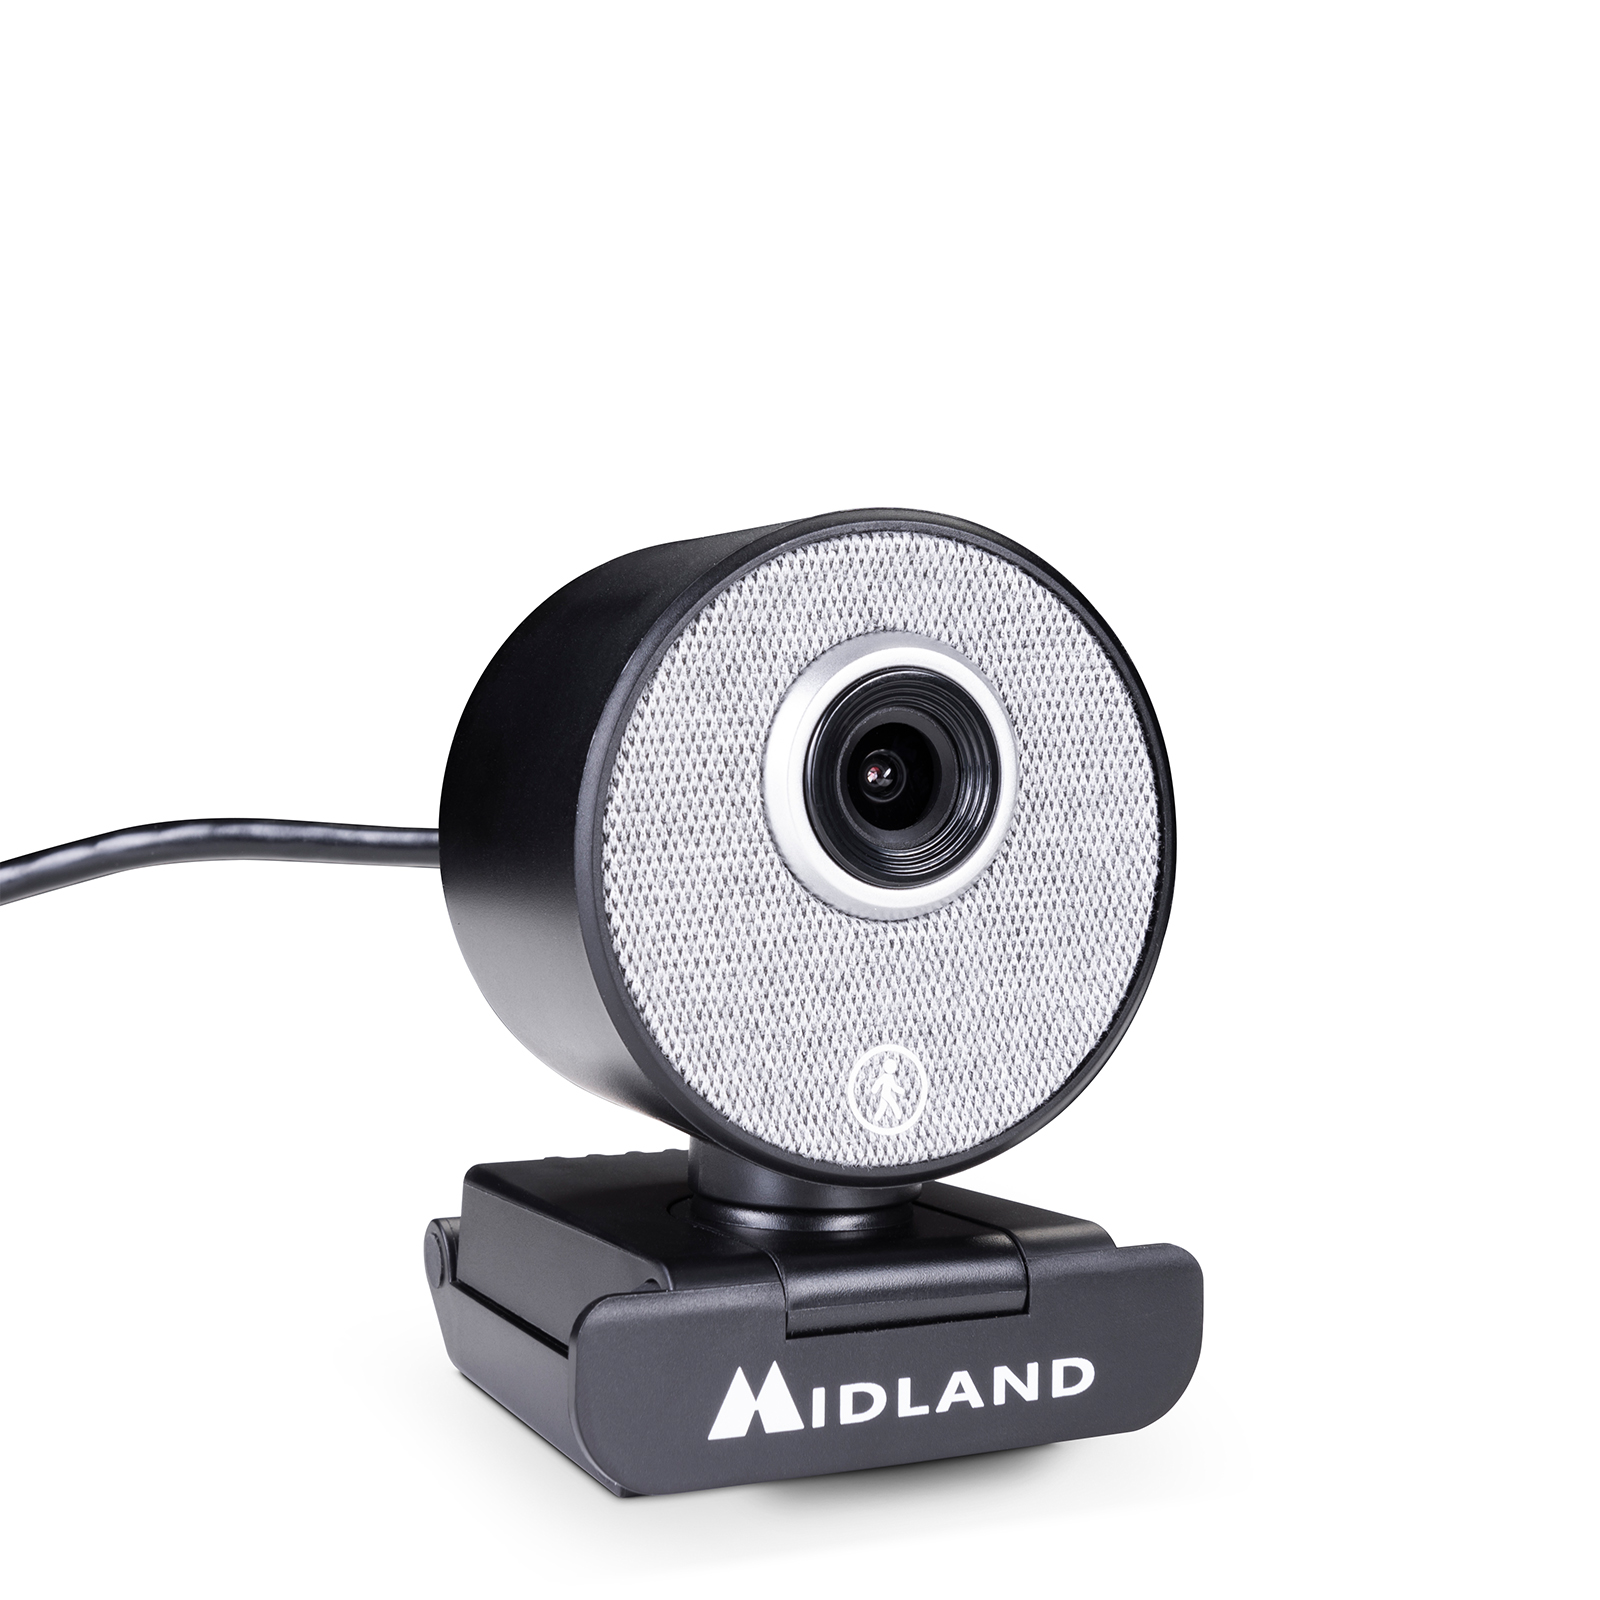 Auto Tracking Webcam Midland Follow-U, Full HD 1080p_8011869204975_MIDLAND_#4